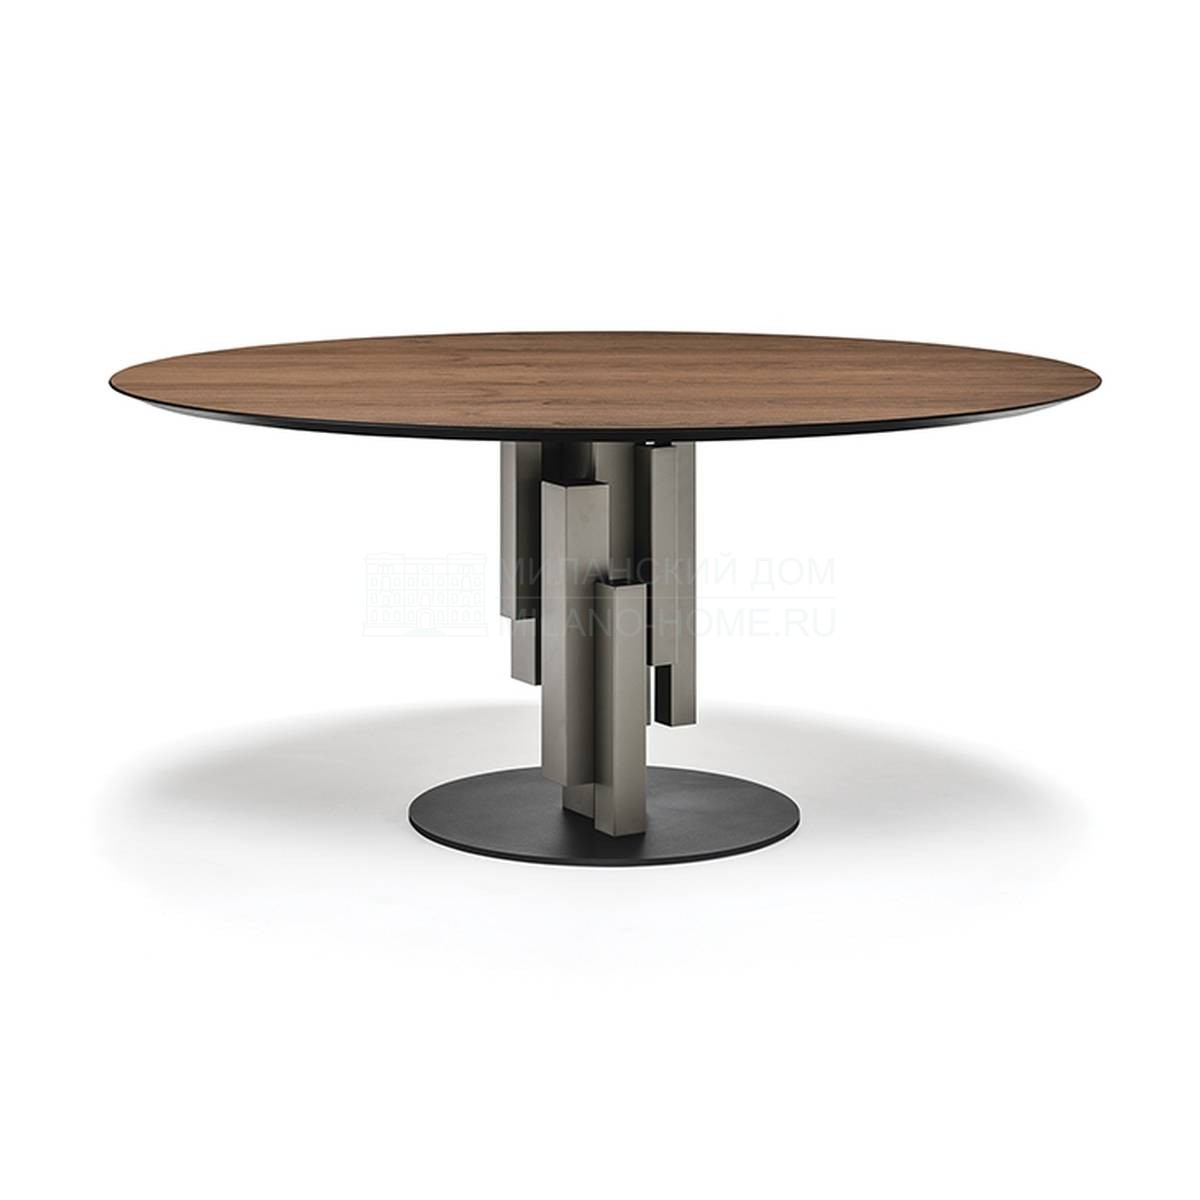 Круглый стол Skyline wood round dining table из Италии фабрики CATTELAN ITALIA